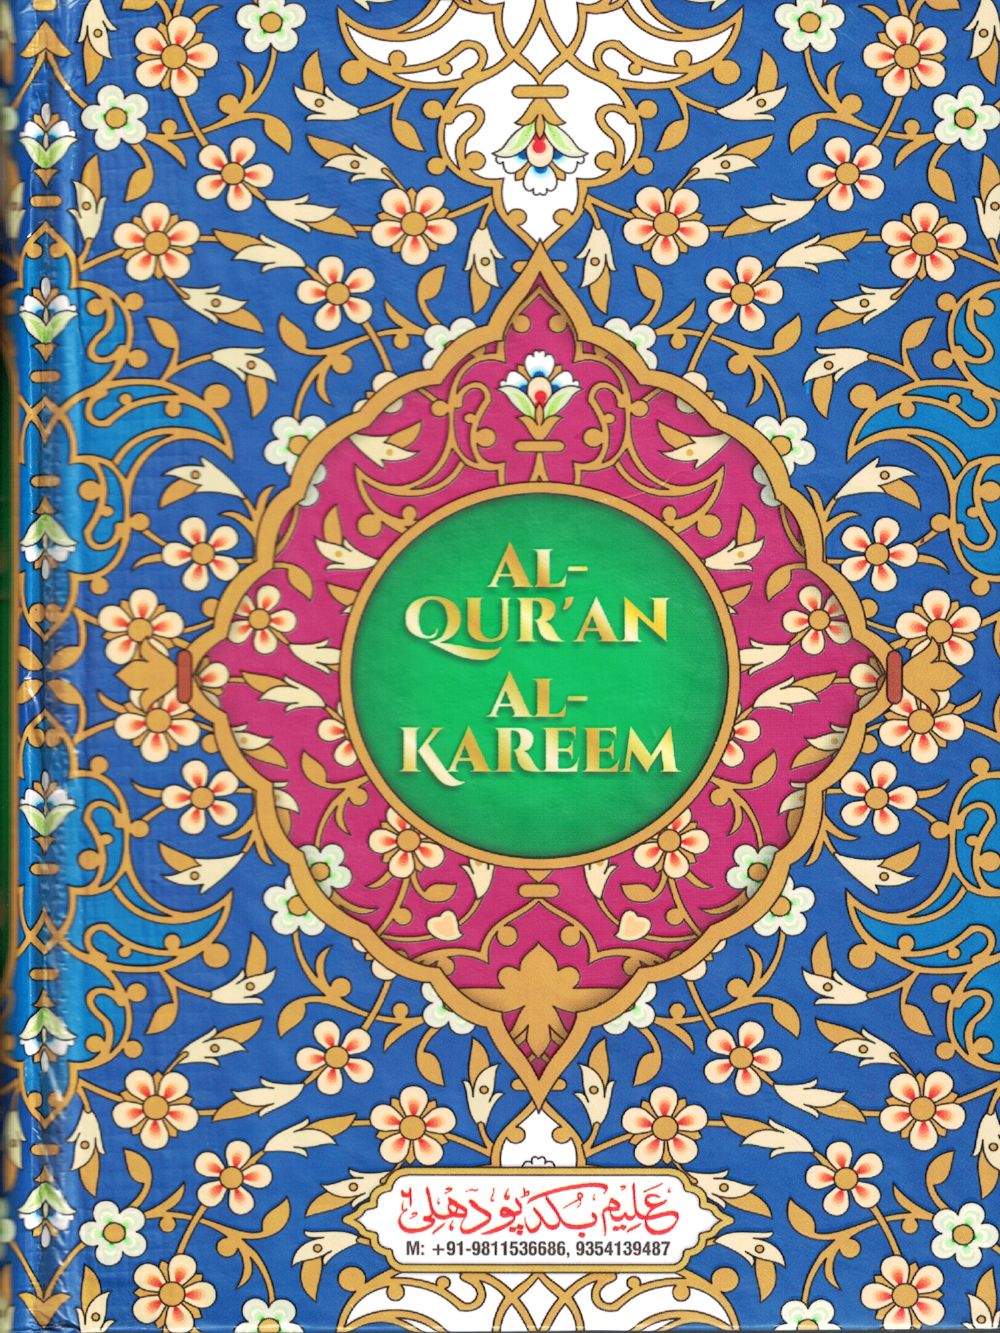 15 Line Qur'an Hafizi 123 5 X 7 - Premium  from I.B Publishers, Inc. - Just $14! Shop now at IQRA' international Educational Foundation